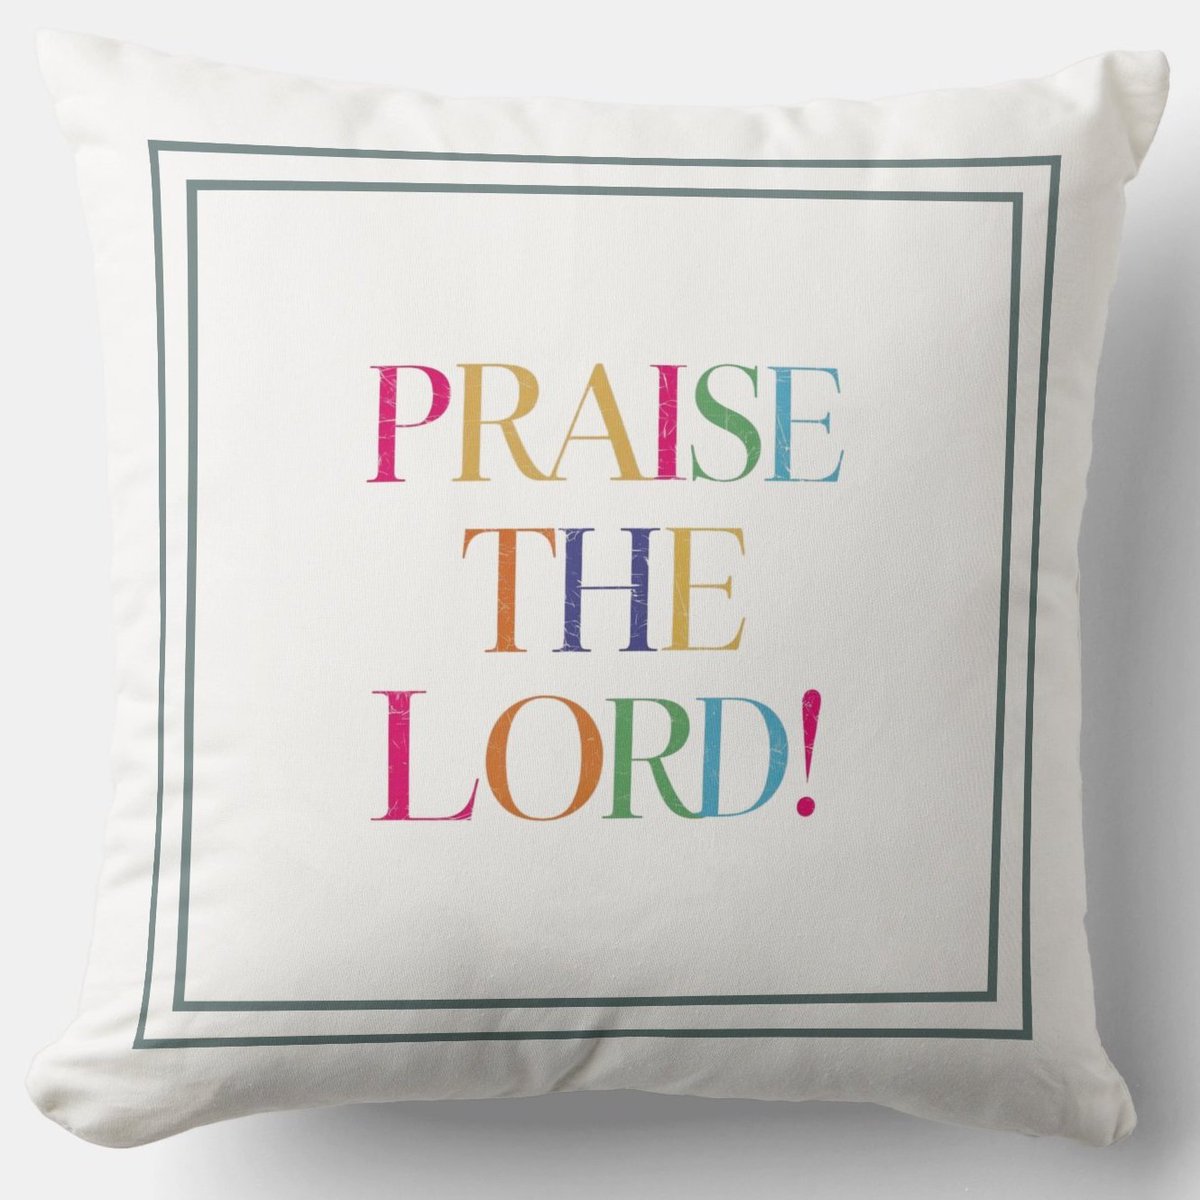 Praise The Lord: Psalms 103:1 #Cushion zazzle.com/praise_the_lor… Throw #Pillow #Blessing #JesusChrist #JesusSaves #Jesus #christian #spiritual #Homedecoration #uniquegift #giftideas #MothersDayGifts #giftformom #giftidea #HolySpirit #pillows #giftshop #giftsforher #giftsformom #god